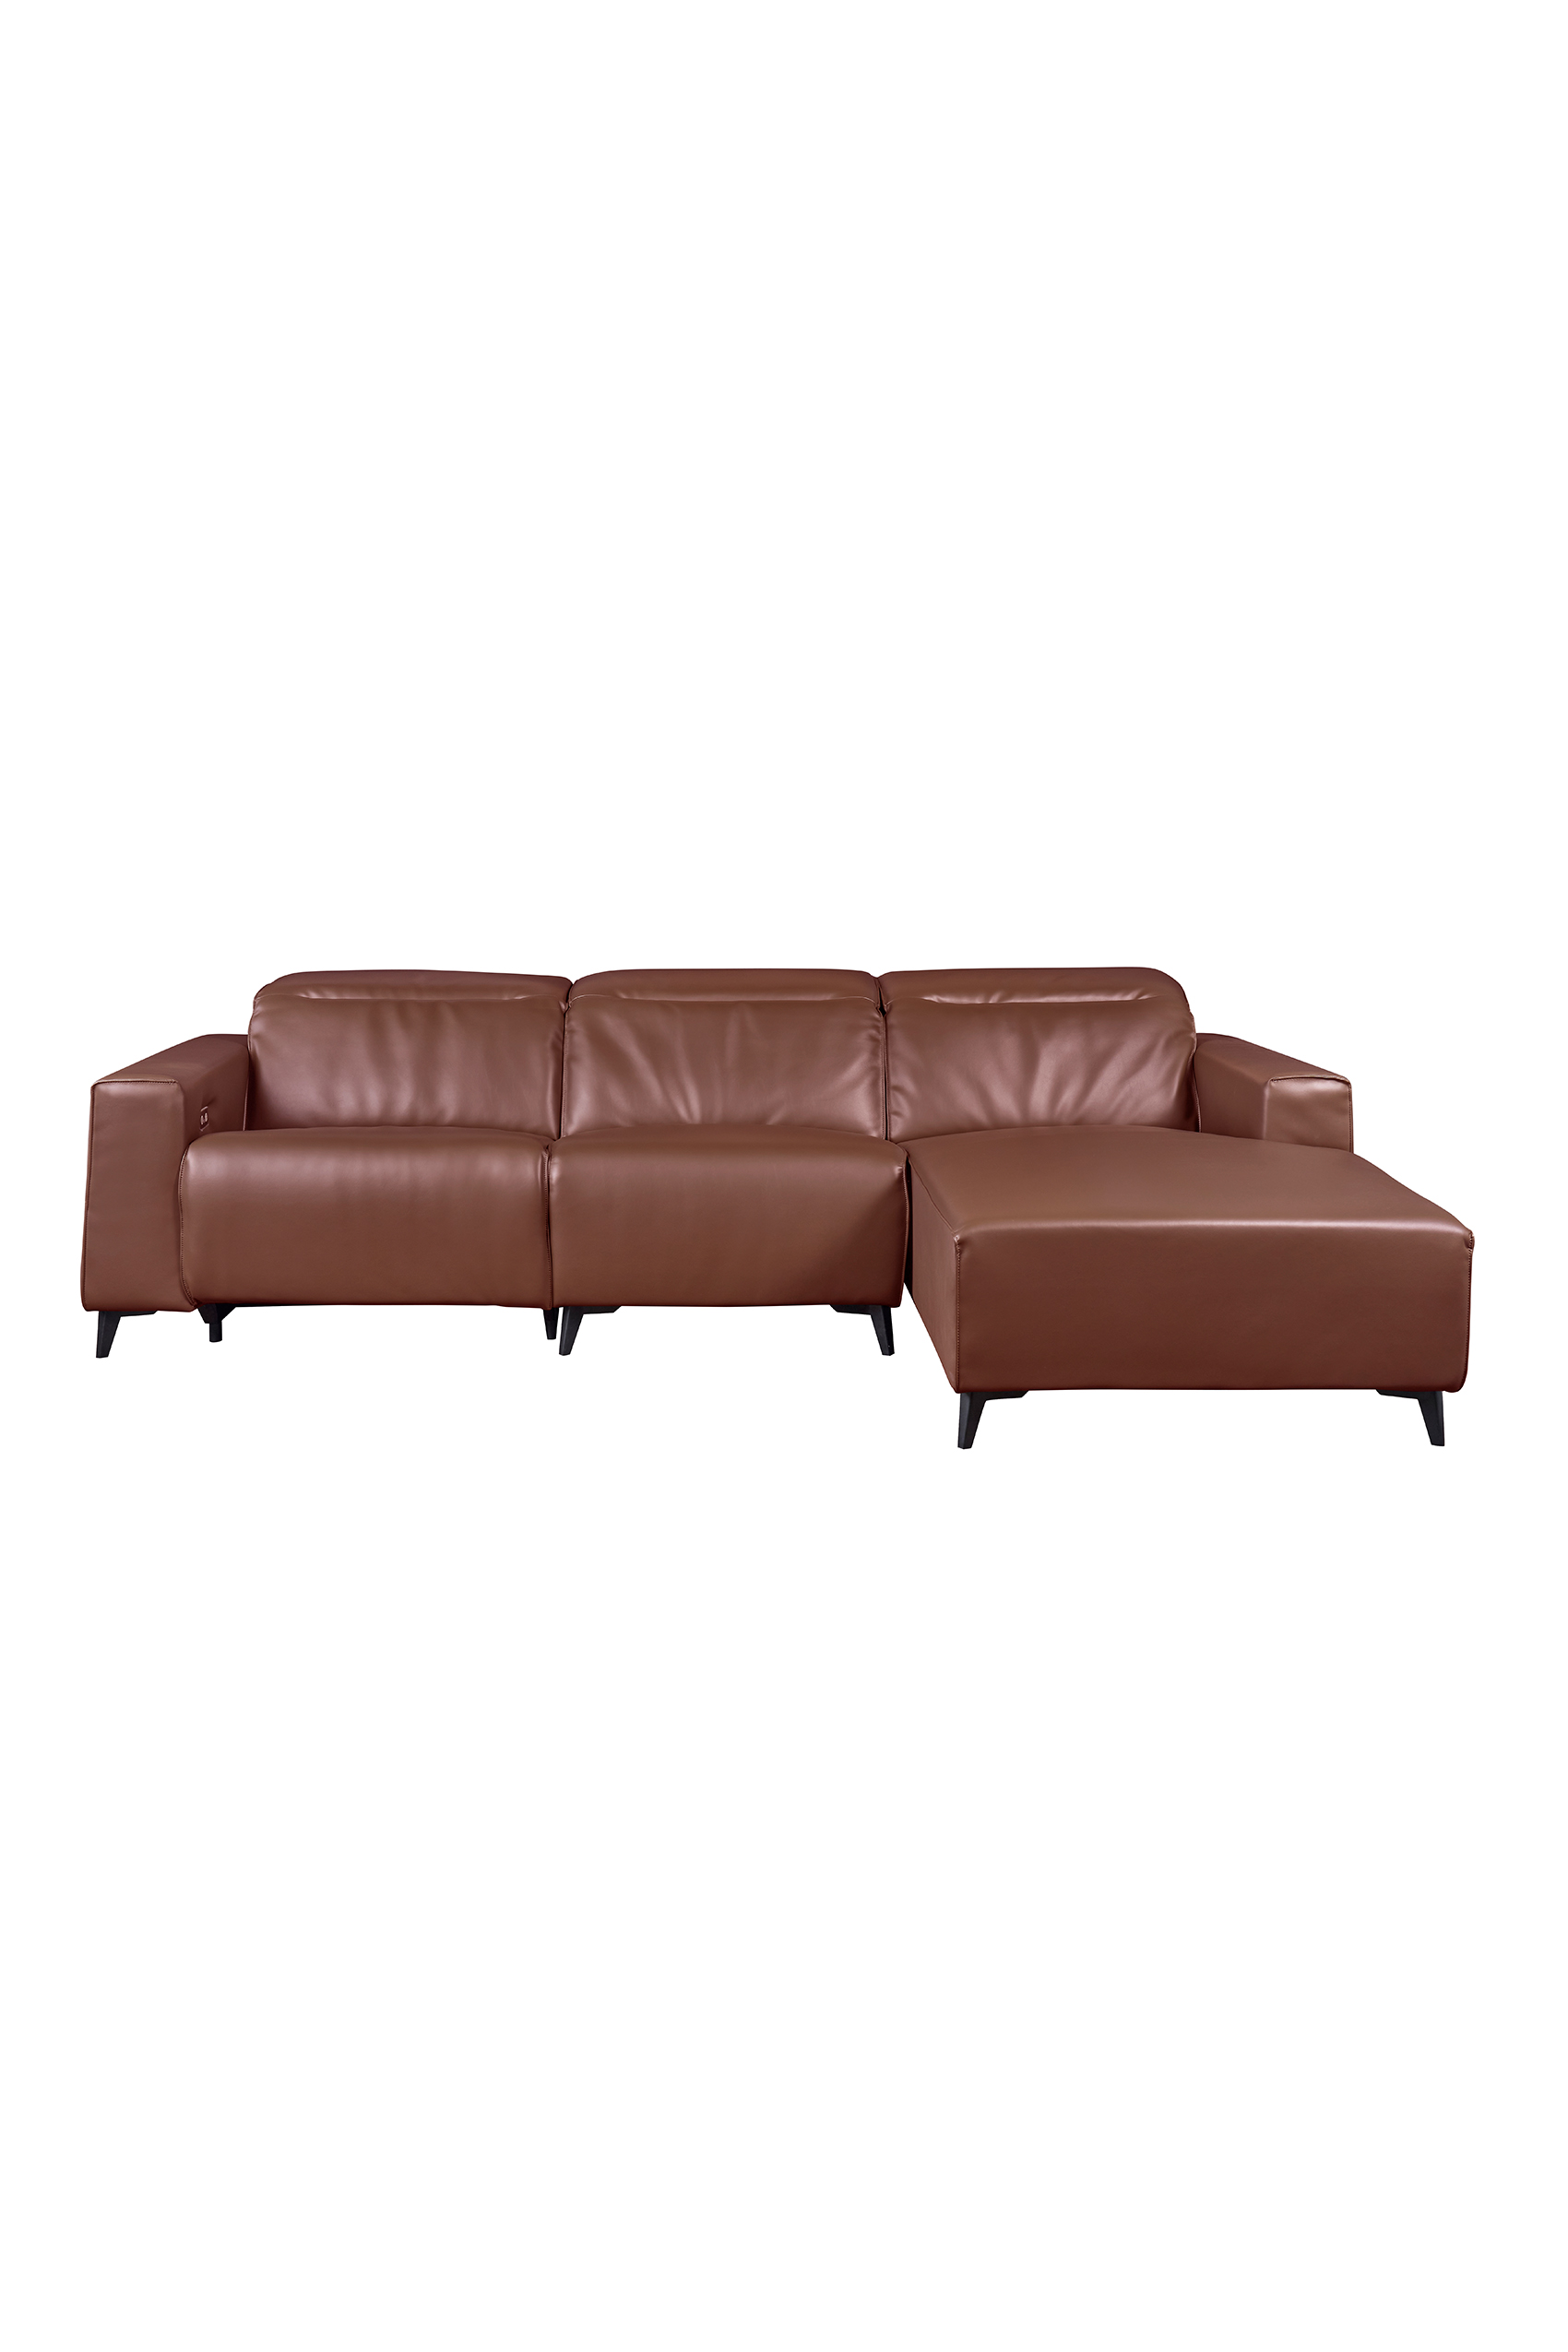 Terzigno Leather Sofa 